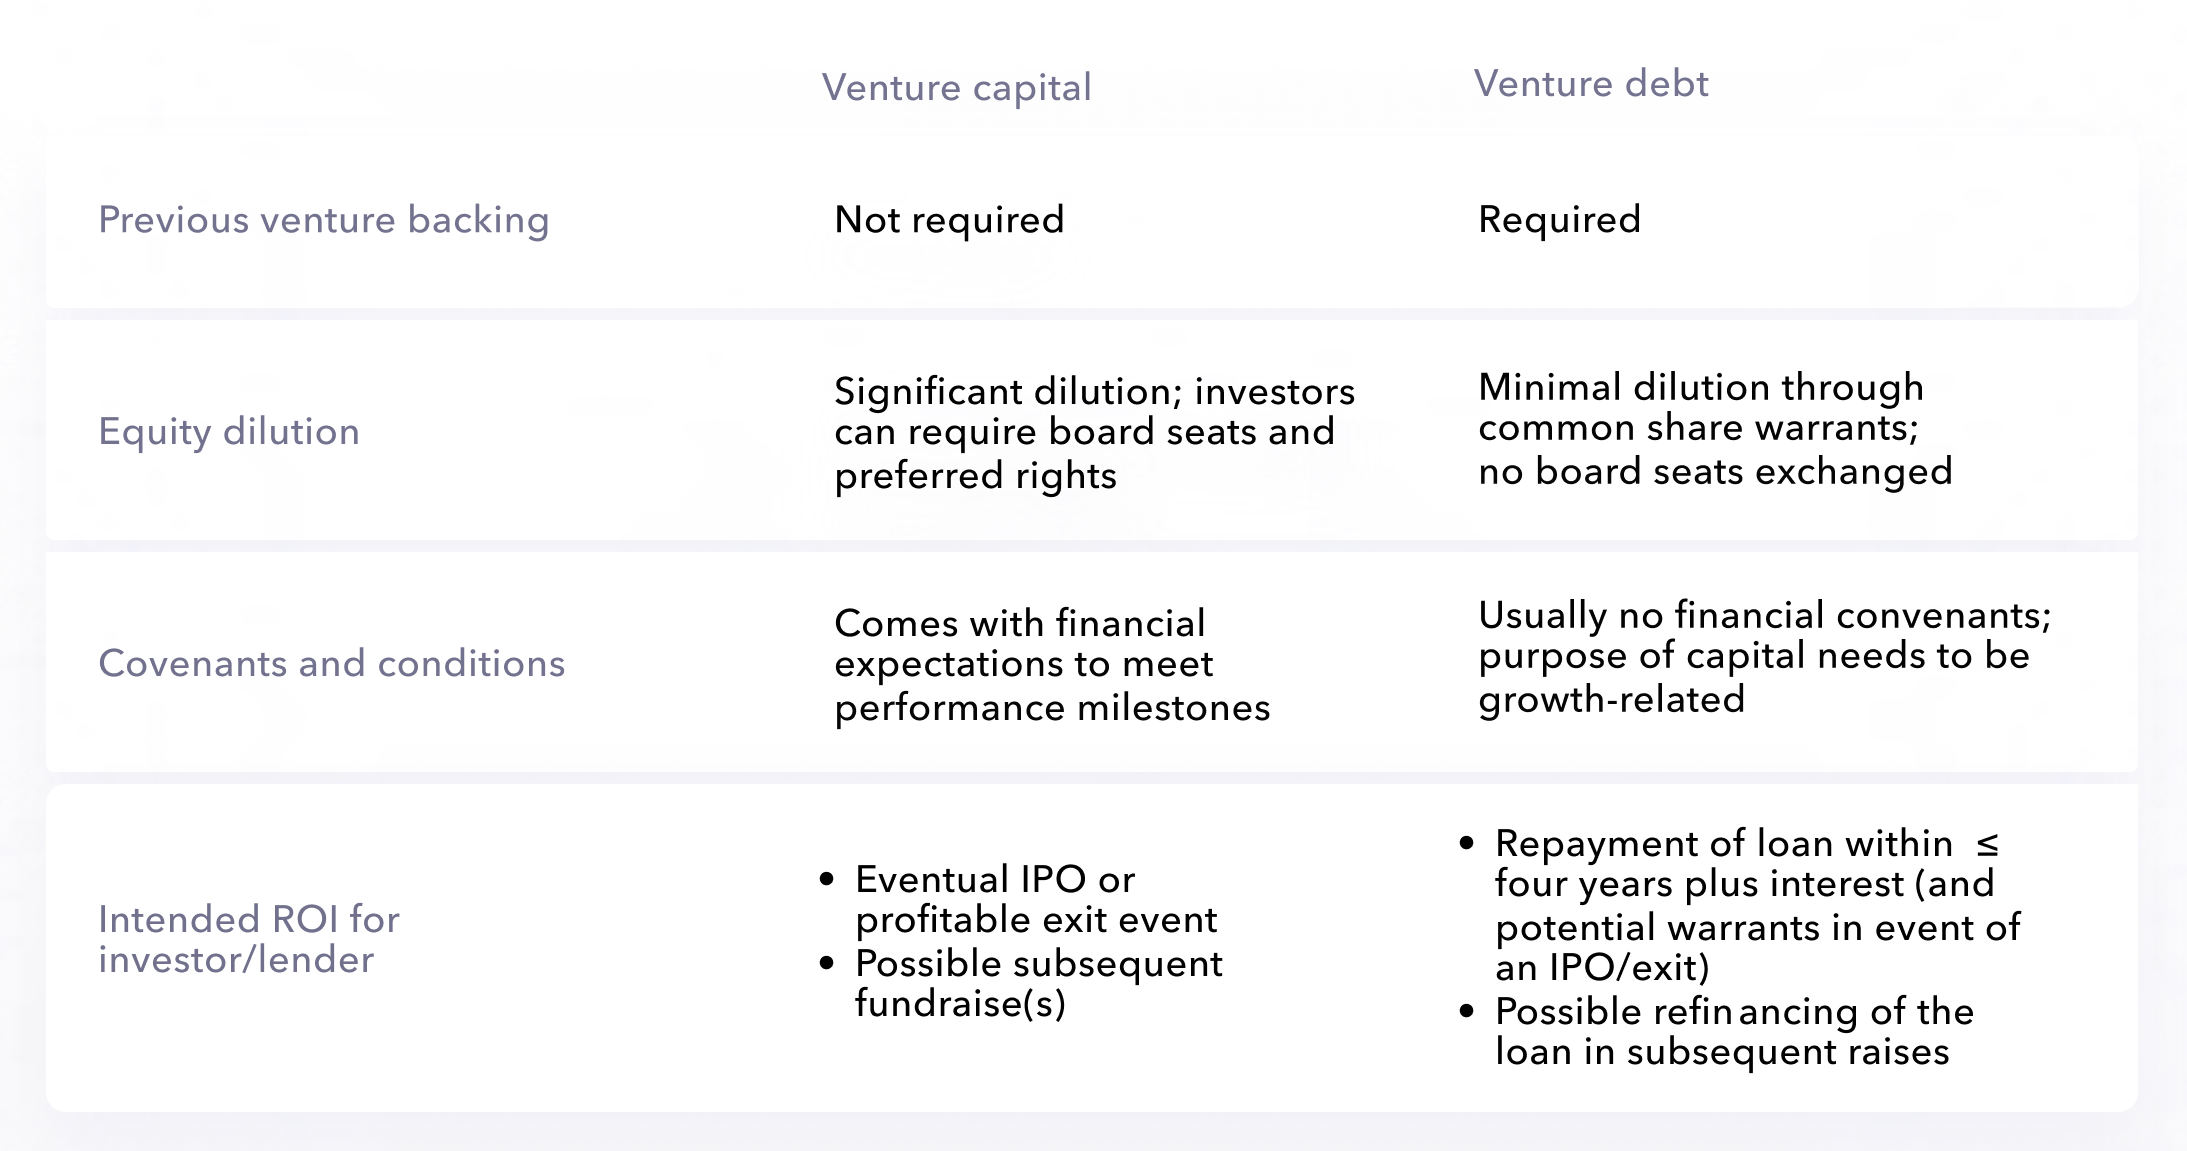 Features of venture debt and venture capital